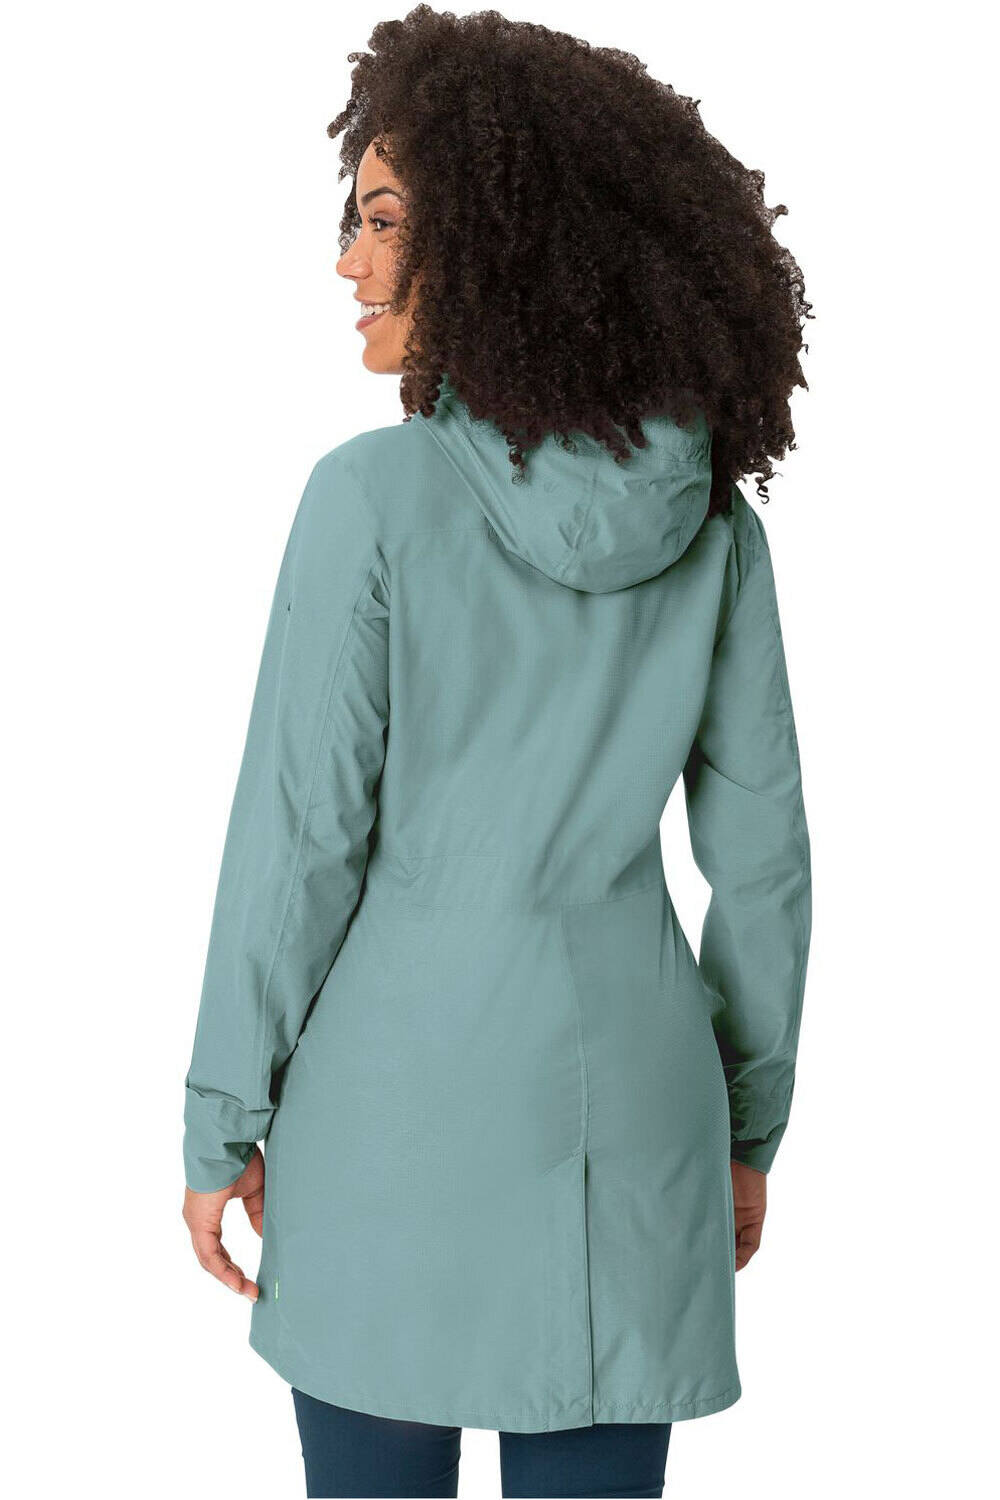 Vaude chaqueta impermeable mujer Women  s Kapsiki Coat II vista trasera